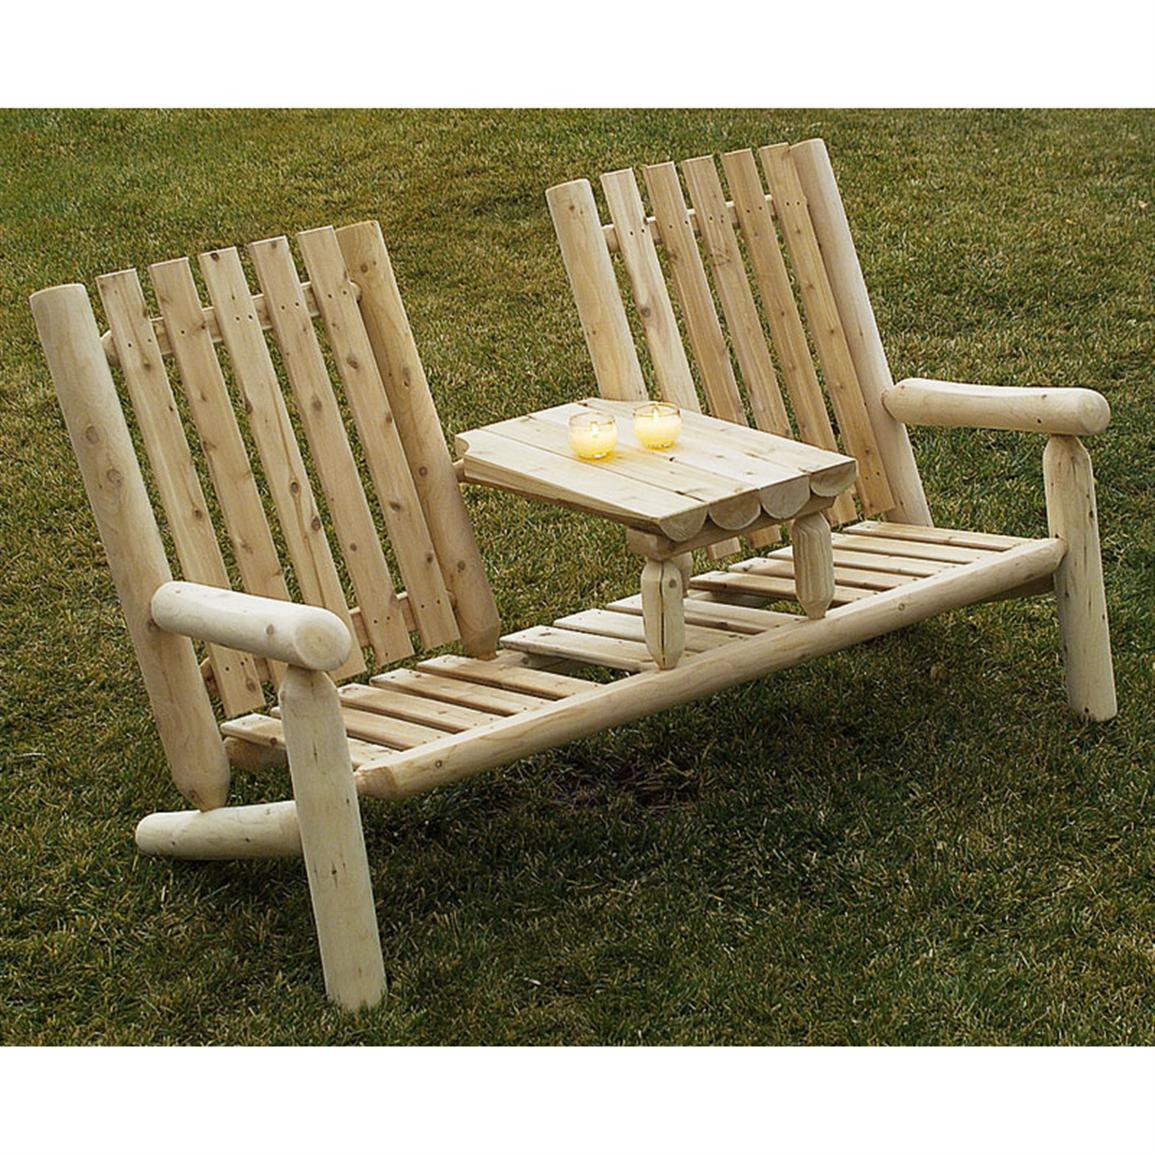 Best ideas about Rustic Patio Furniture
. Save or Pin Rustic Natural Cedar Furniture pany Cedar Log Garden Now.